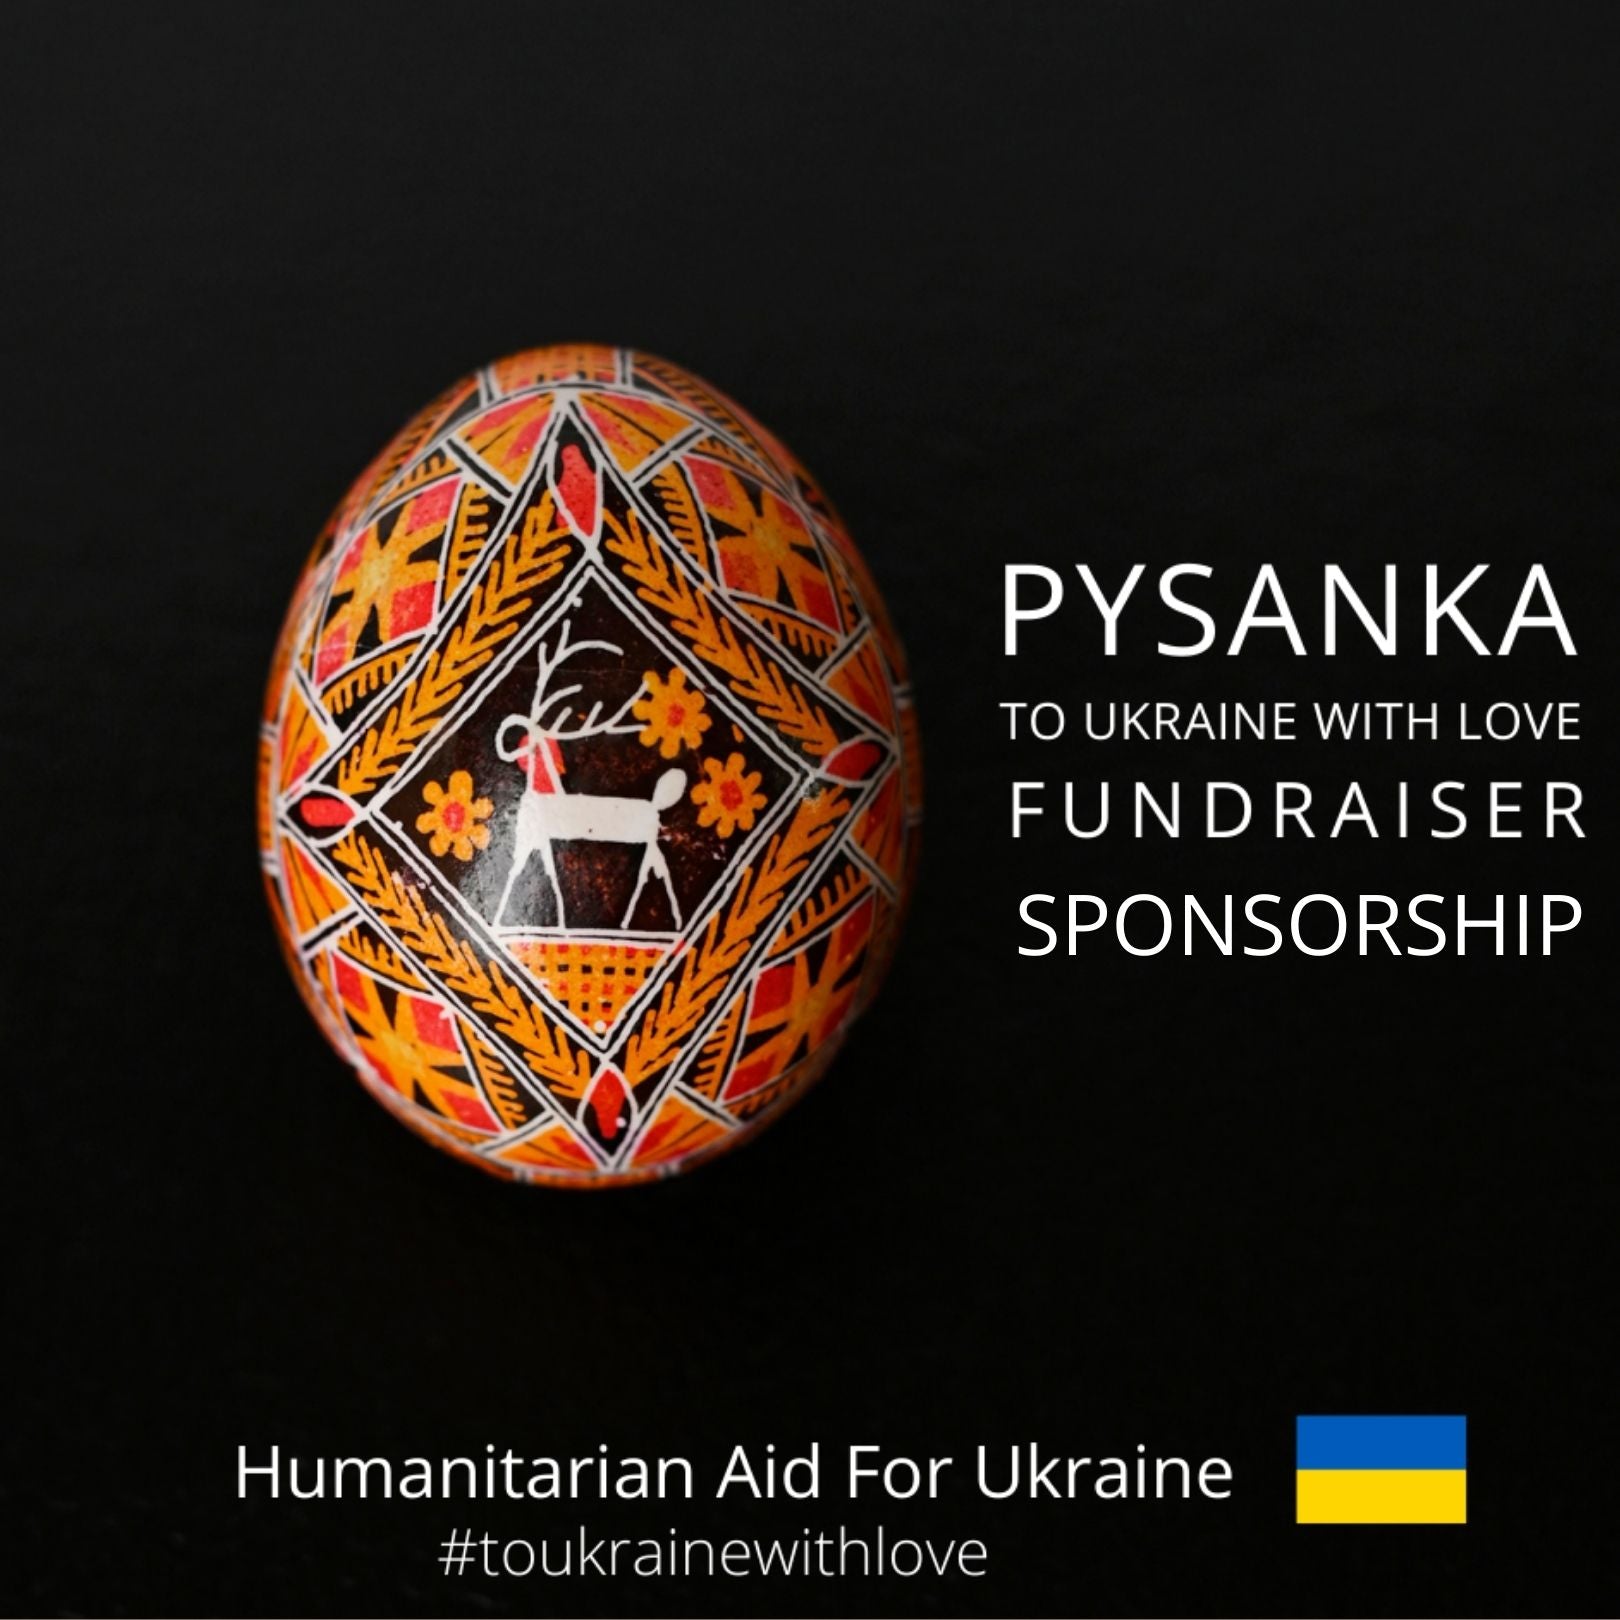 Sponsorship - PYSANKA; To Ukraine With Love Fundraiser - ORESTA clean beauty simplified